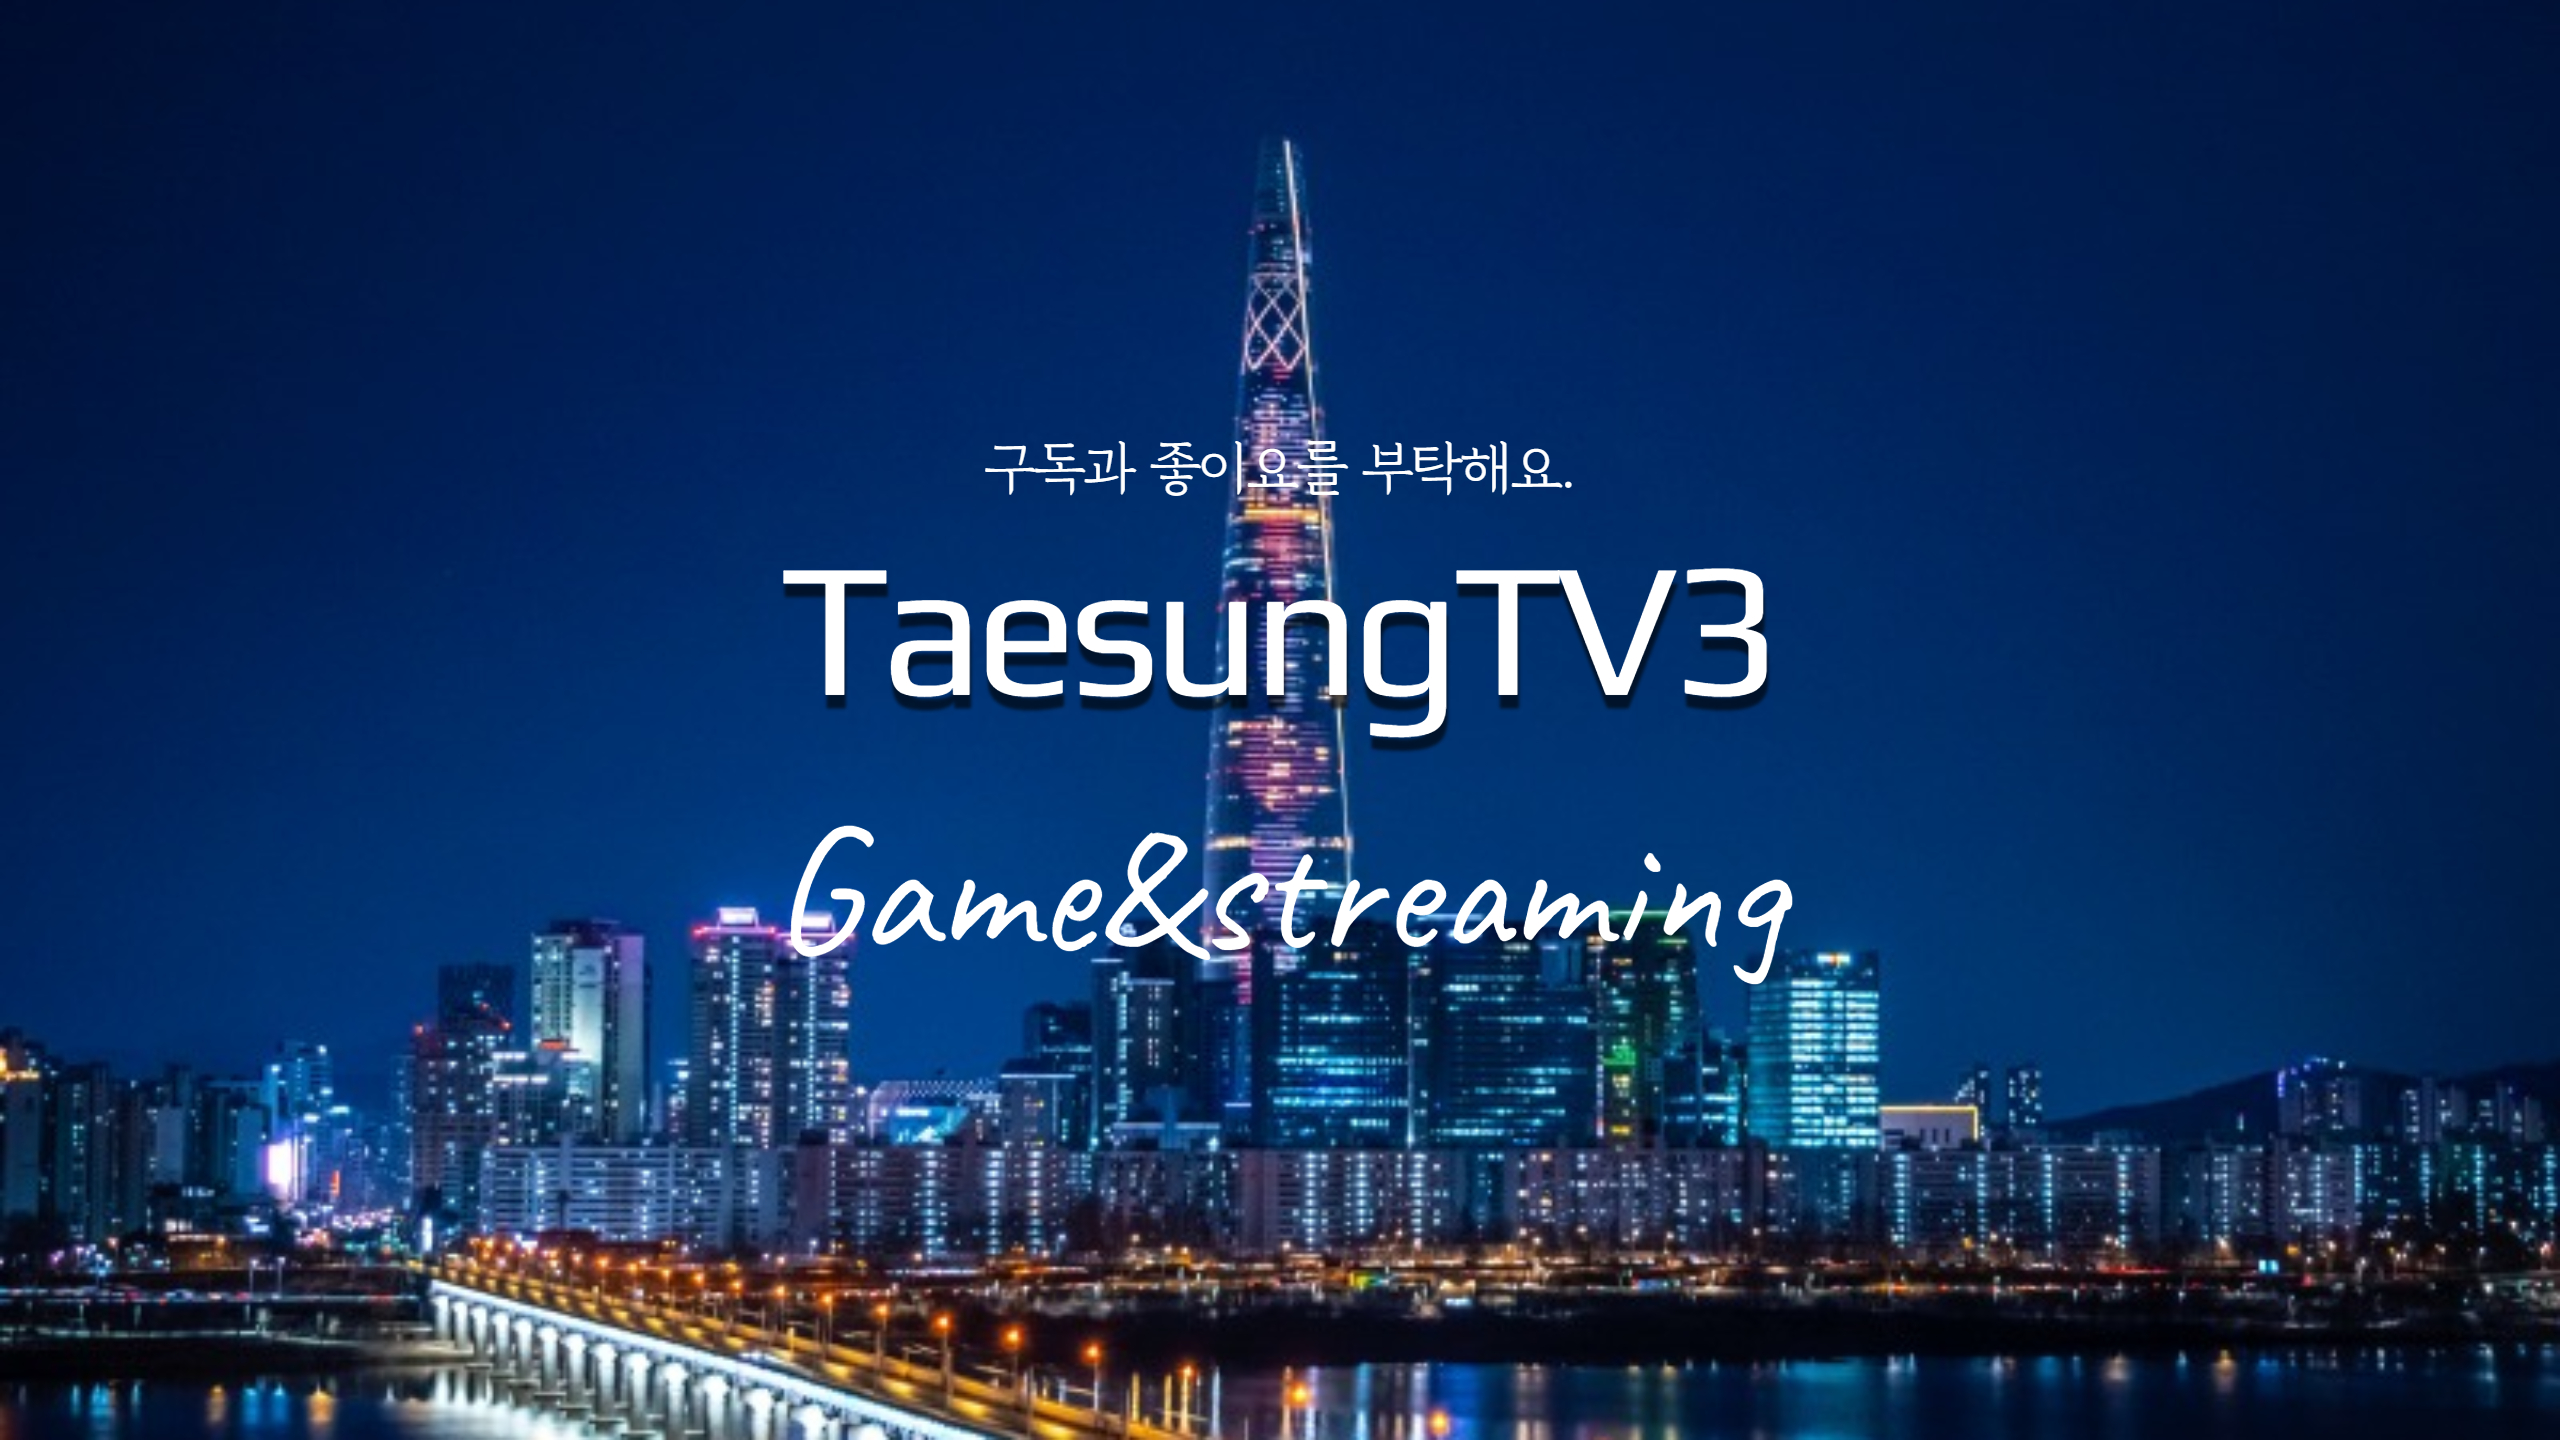 TaesungTV3-001.jpg